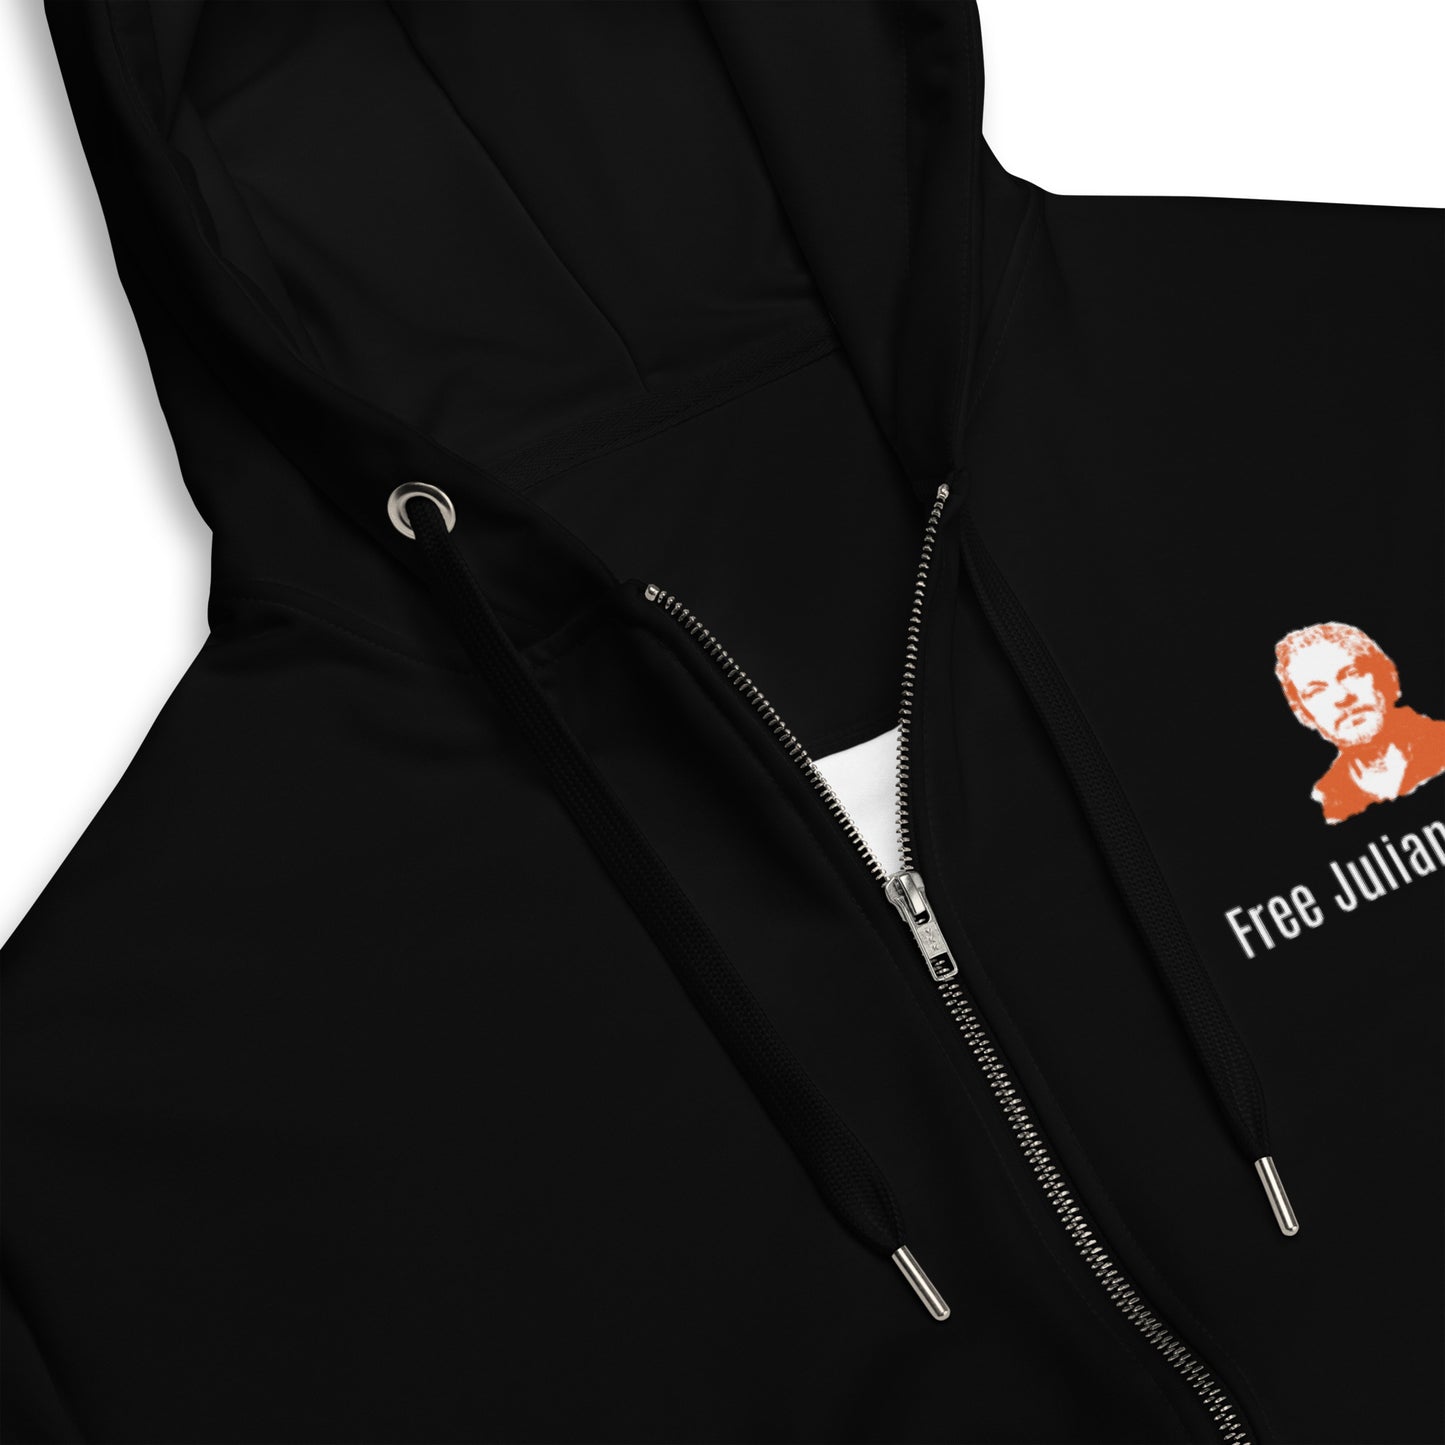 Free Julian Assange - Unisex zip hoodie